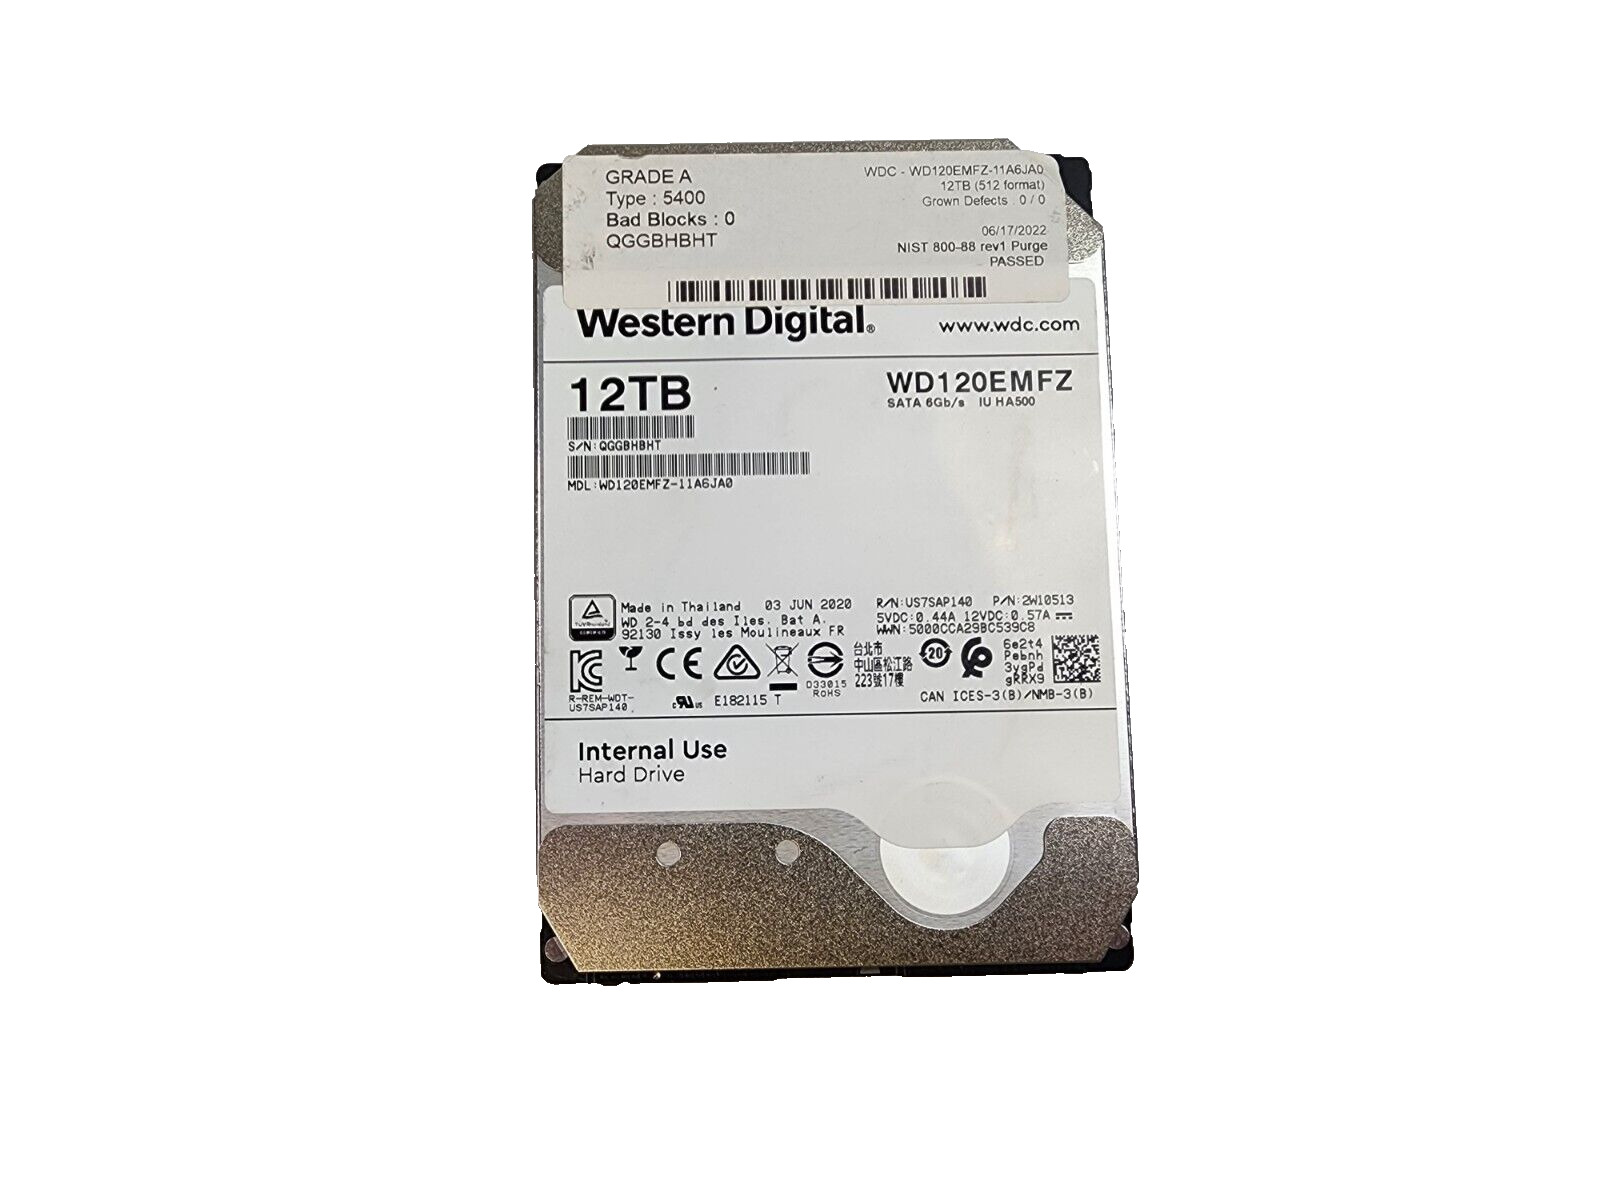 Western Digital WD120EMFZ-11A6JA0 12TB  5400 Storage Drive  hard drive Tested